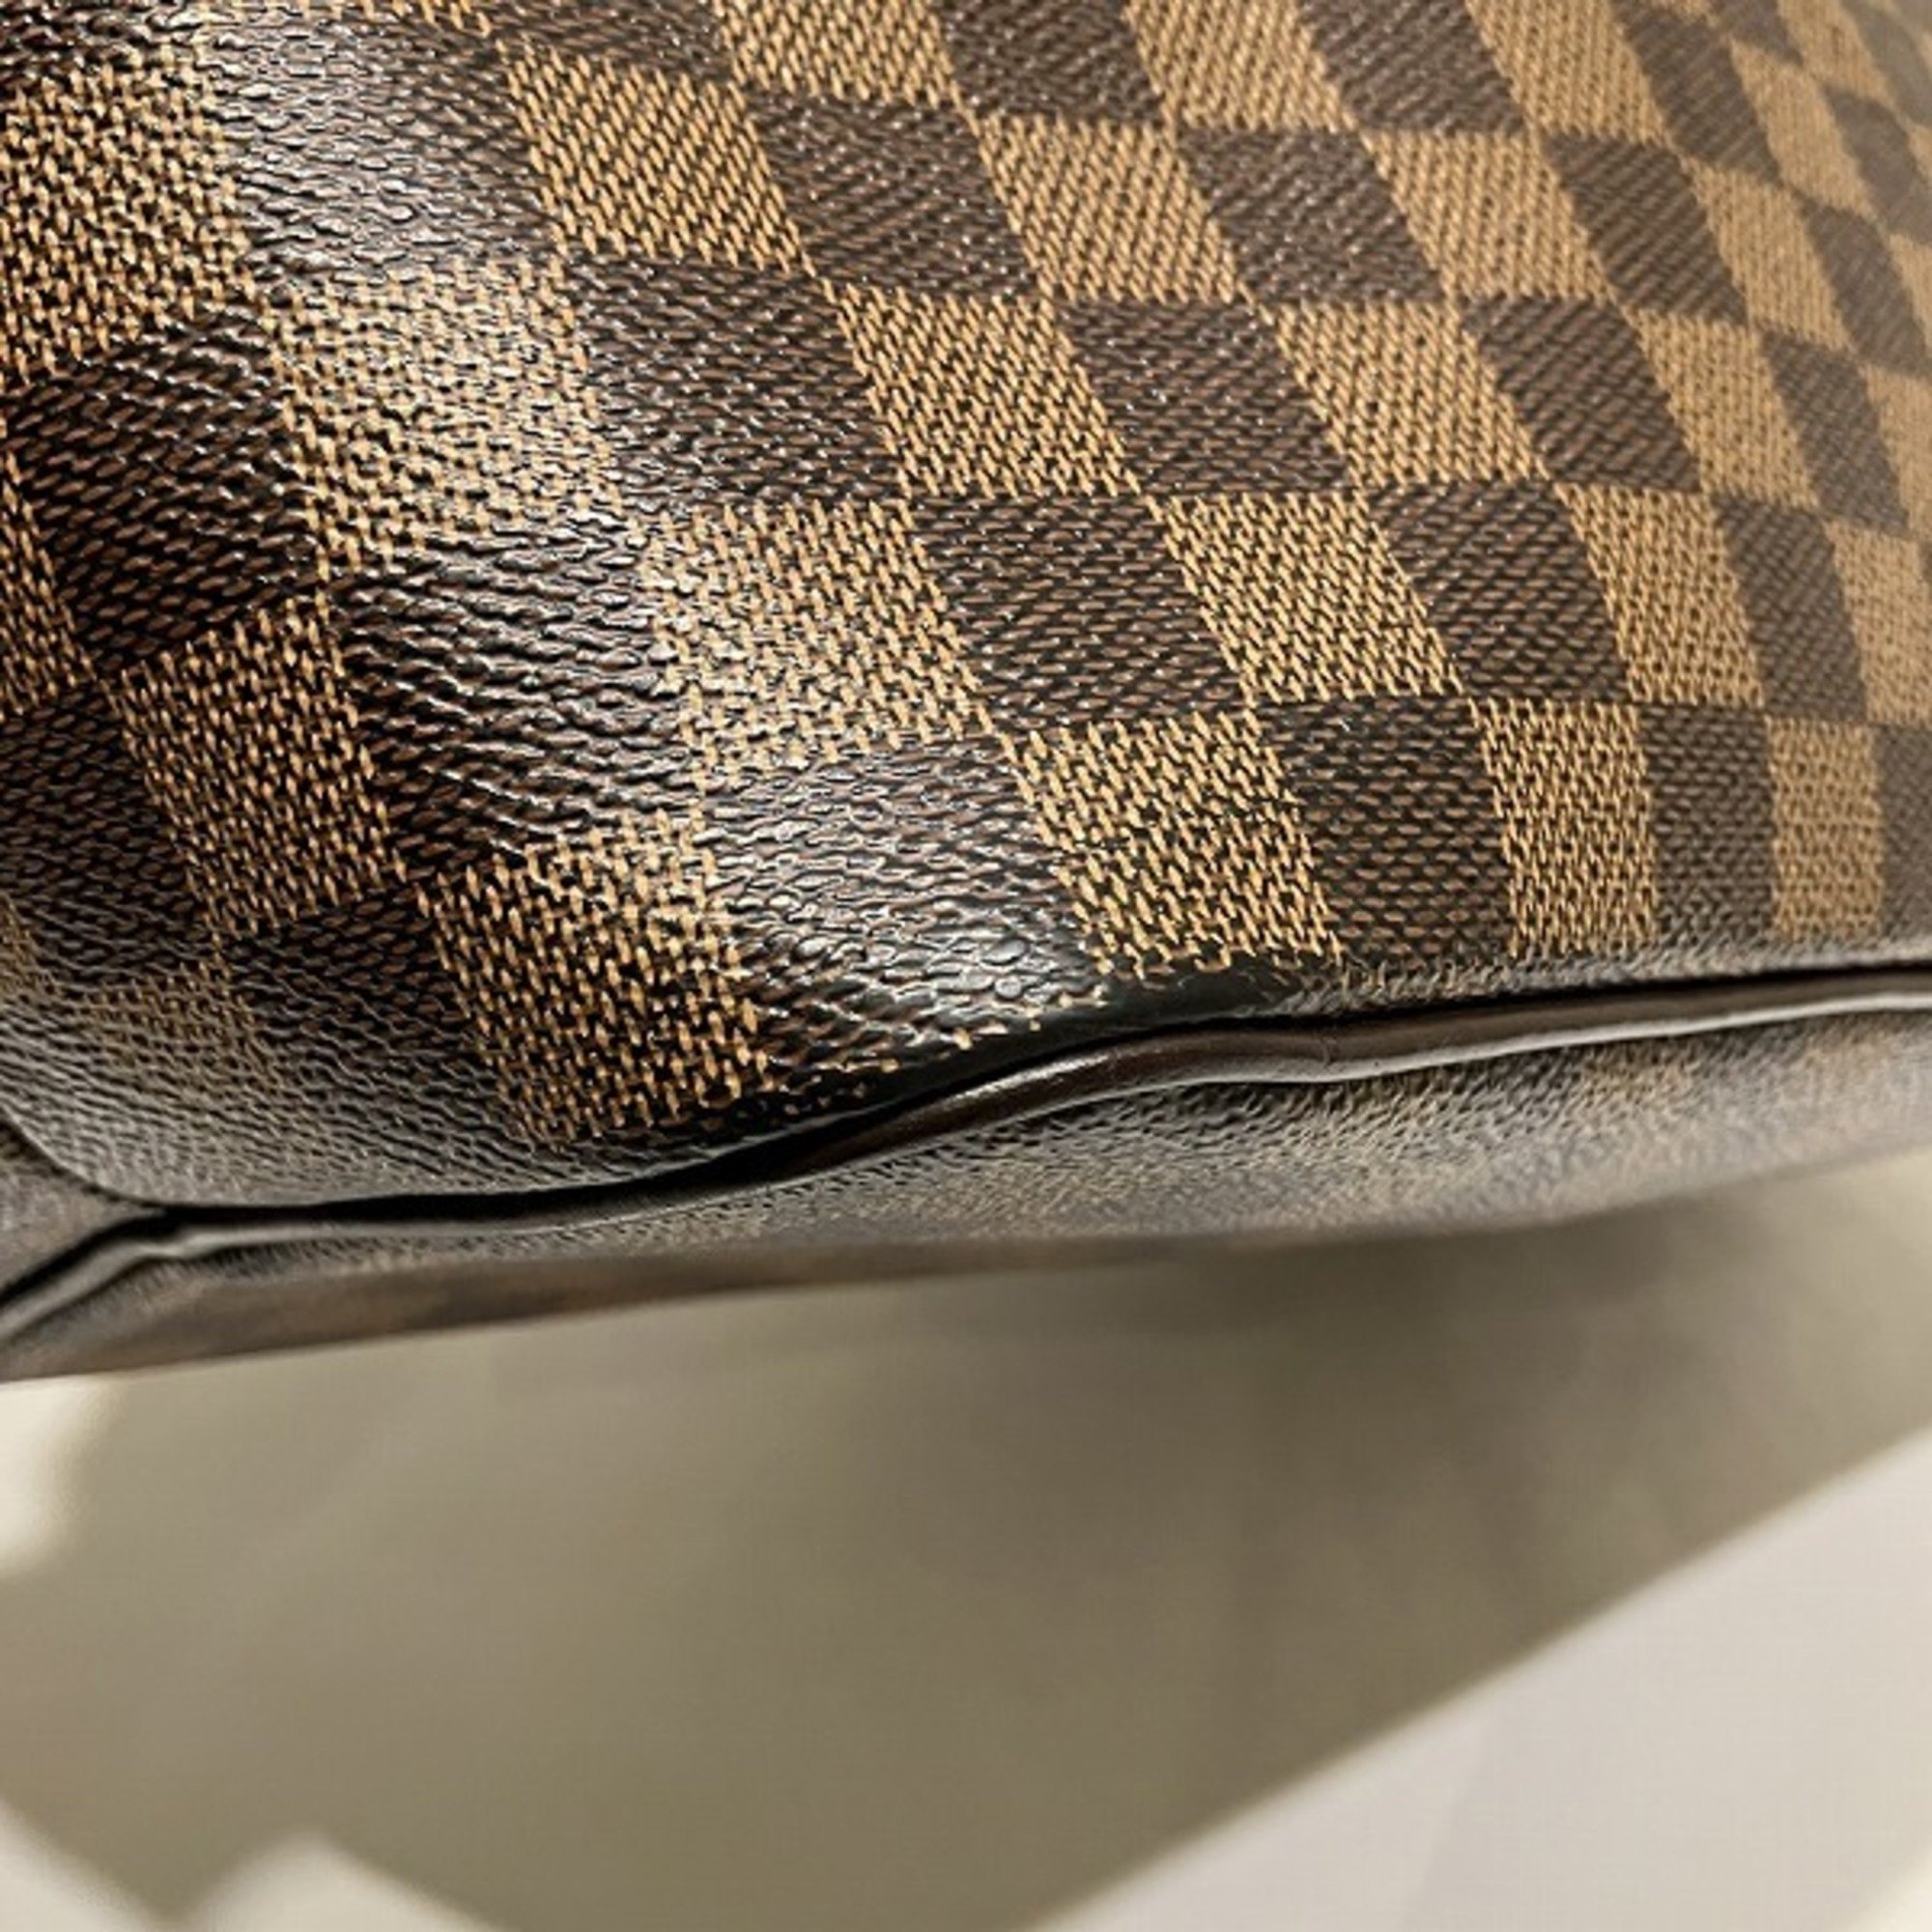 Louis Vuitton Damier Westminster PM N41102 Bag Handbag Shoulder Ladies